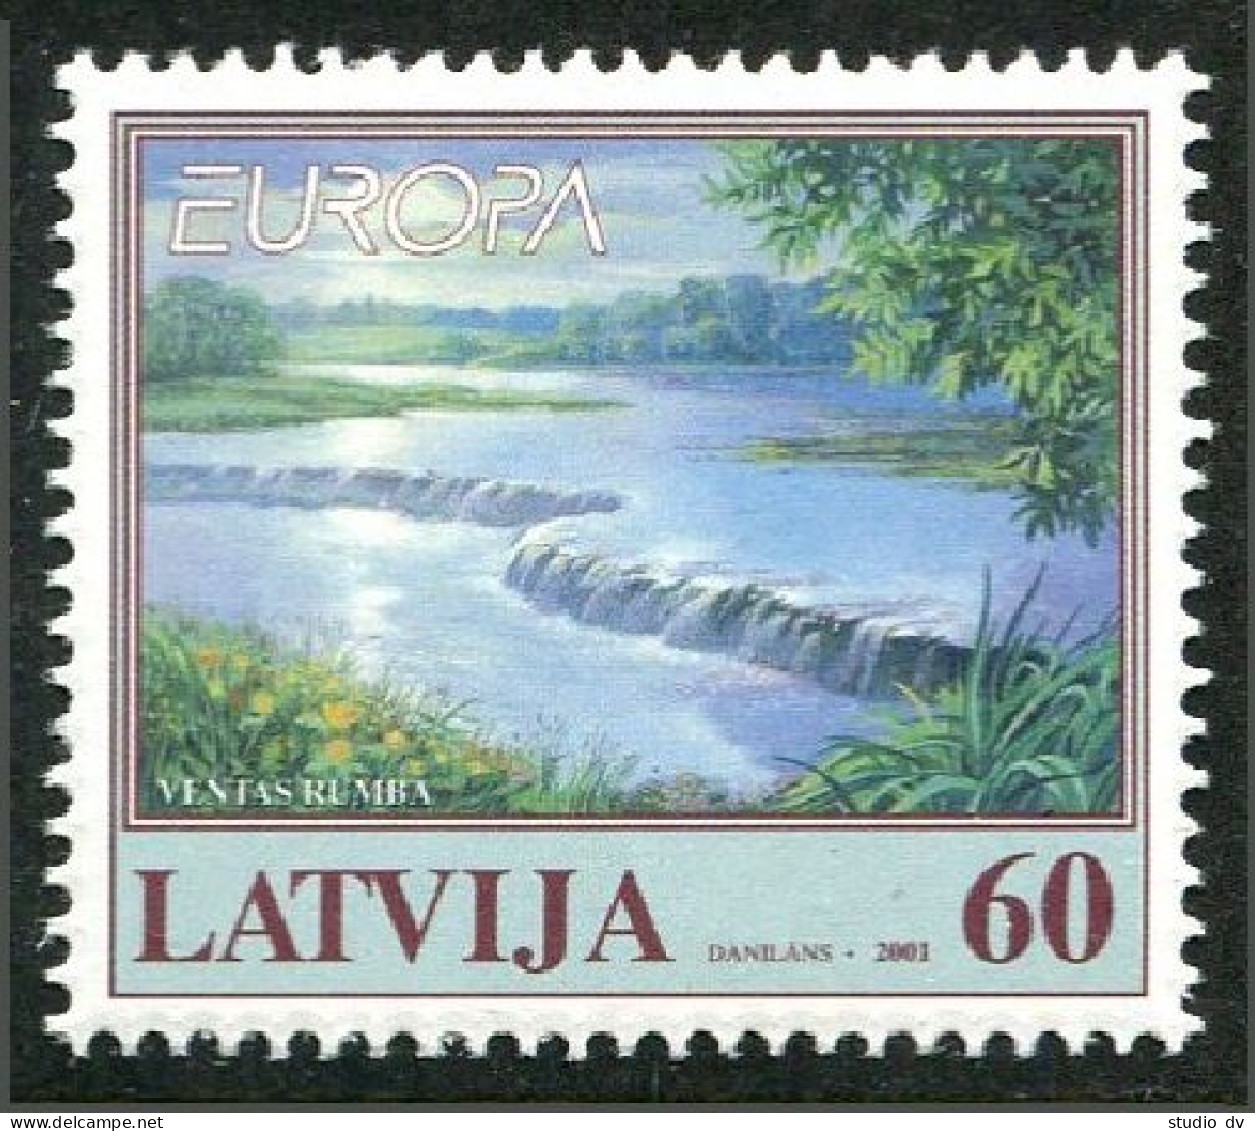 Latvia 528, MNH. Michel 544. EUROPA CEPT-2001. Lake. - Lettland